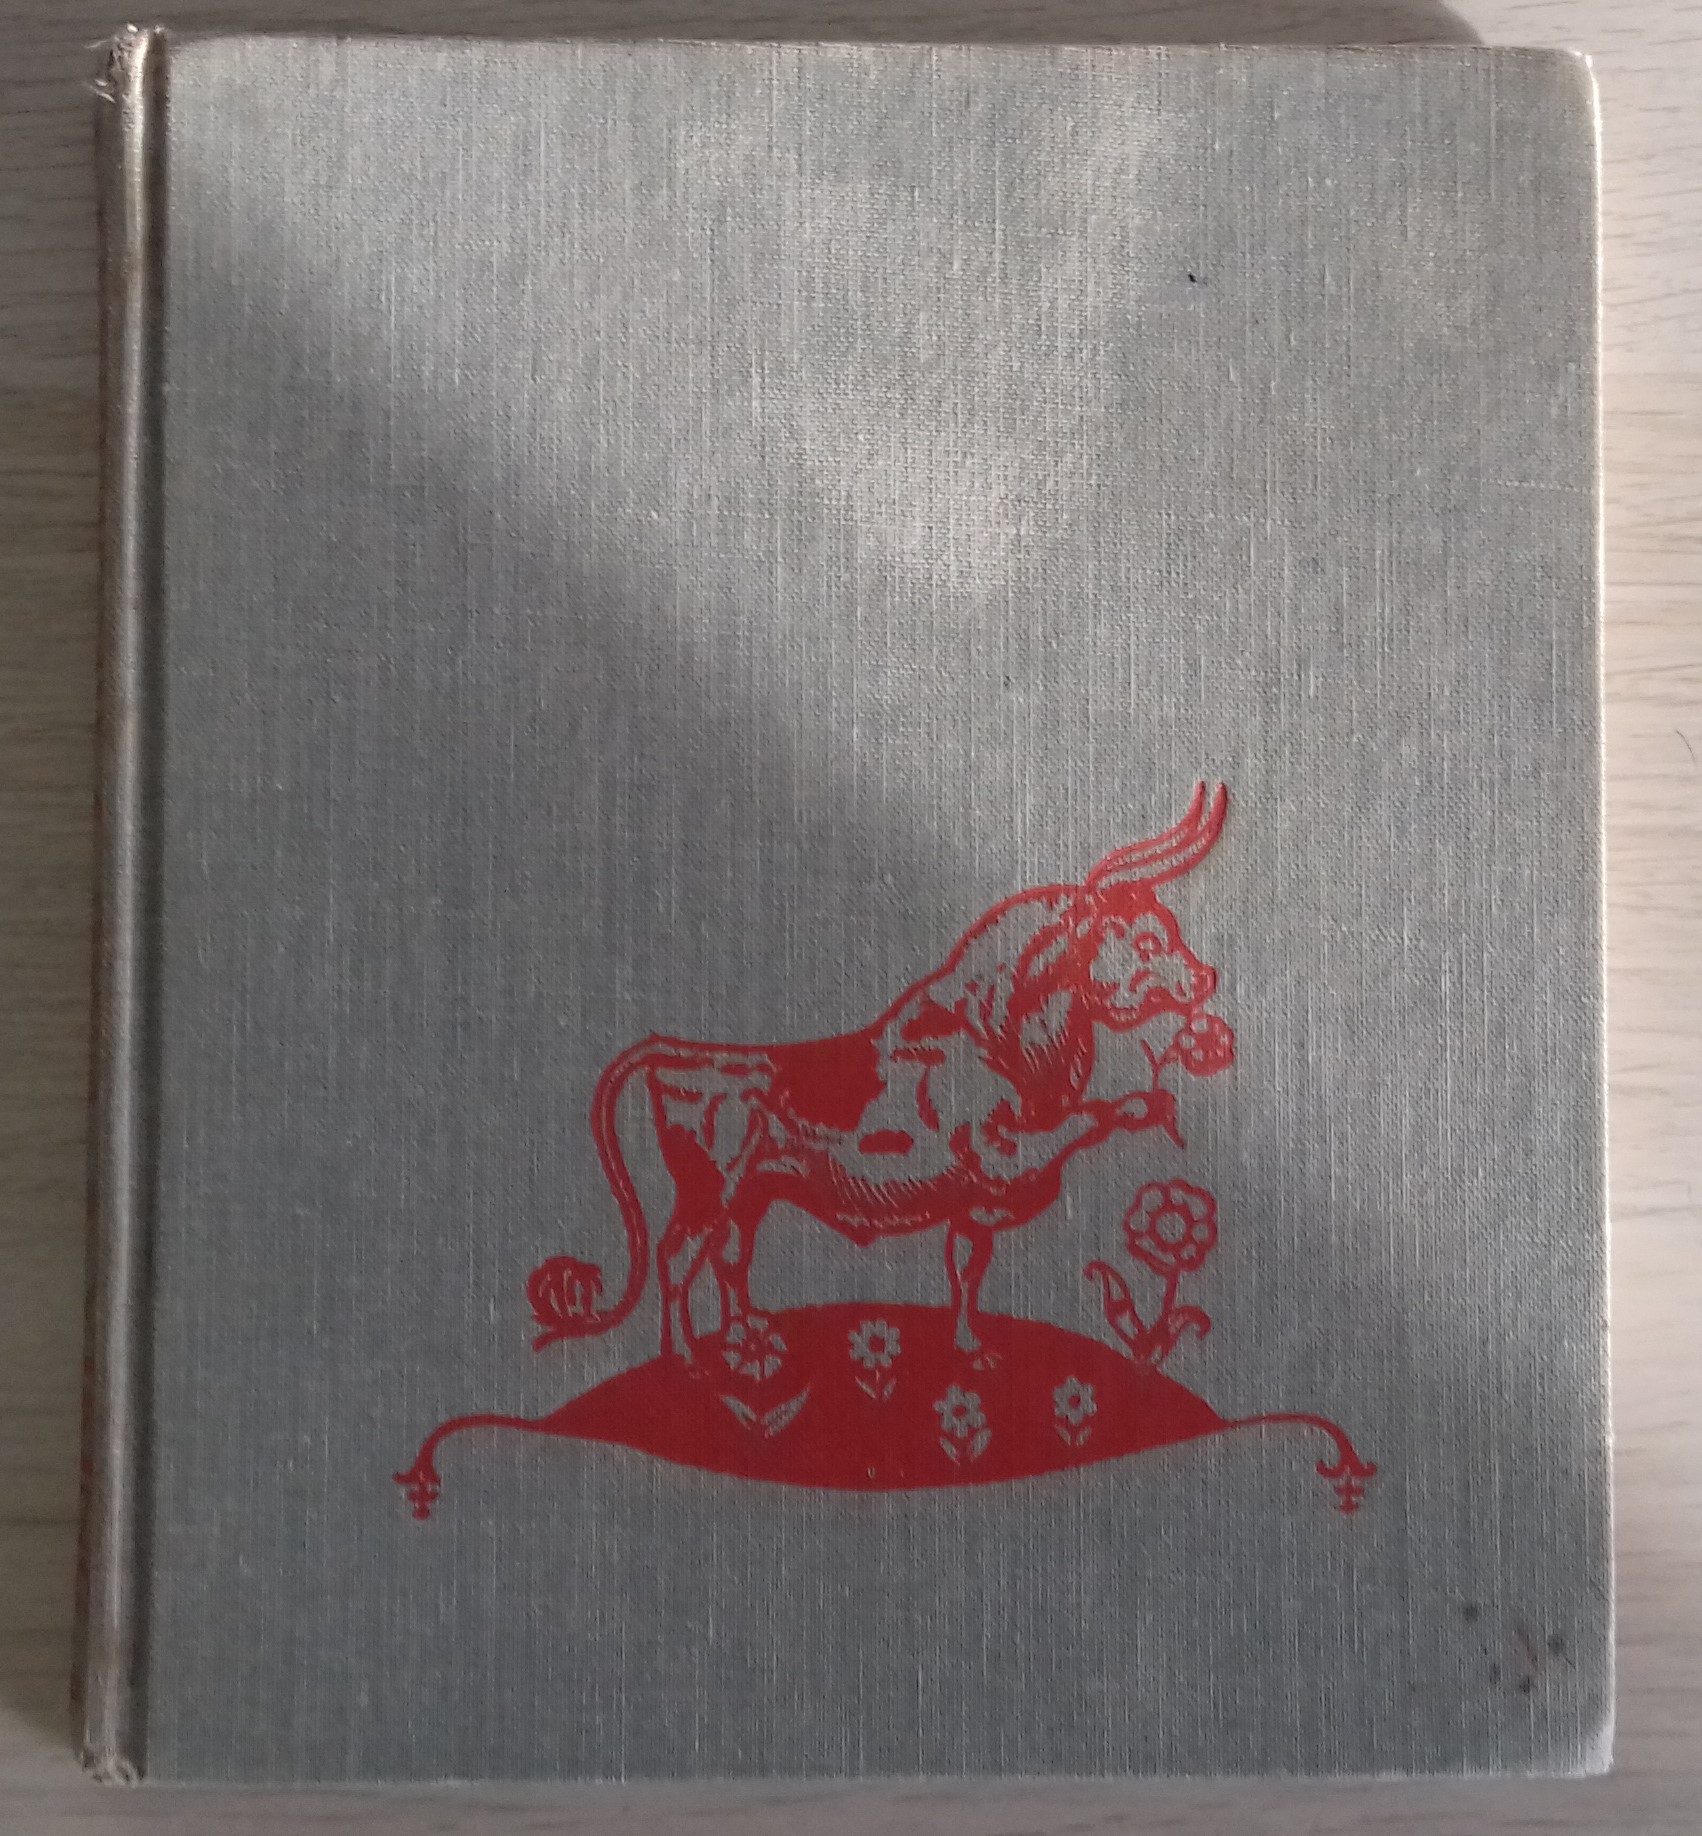 My linen-bound copy original of Ferdinand the BUll by Munro Leaf